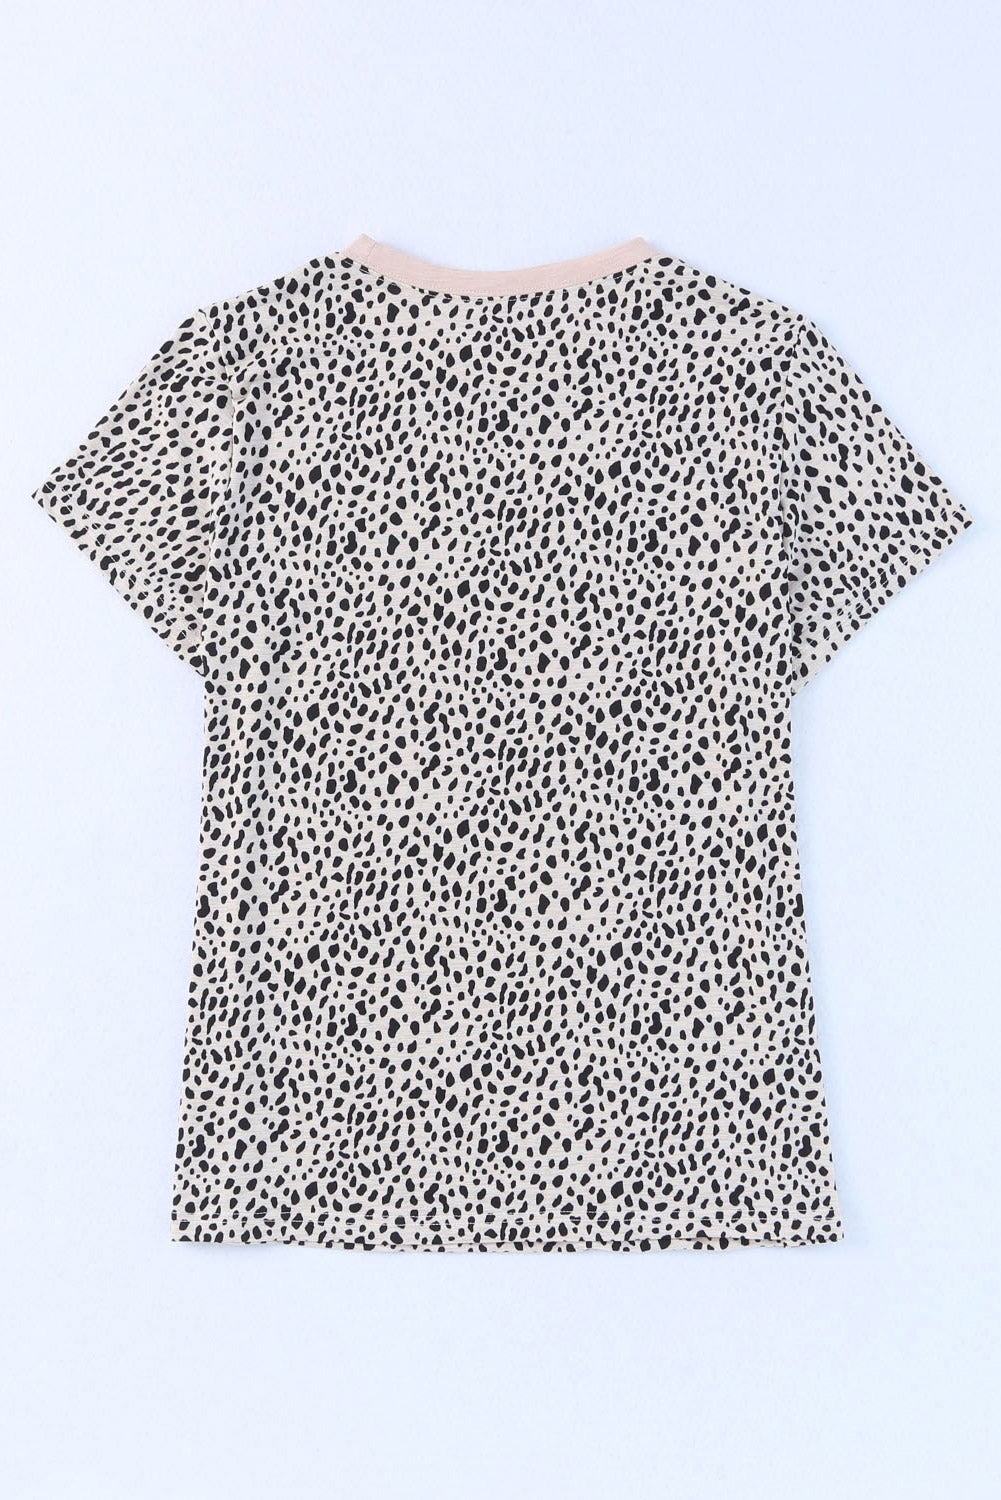 Apricot Leopard MAMA Graphic Crew Neck T Shirt Graphic Tees JT's Designer Fashion